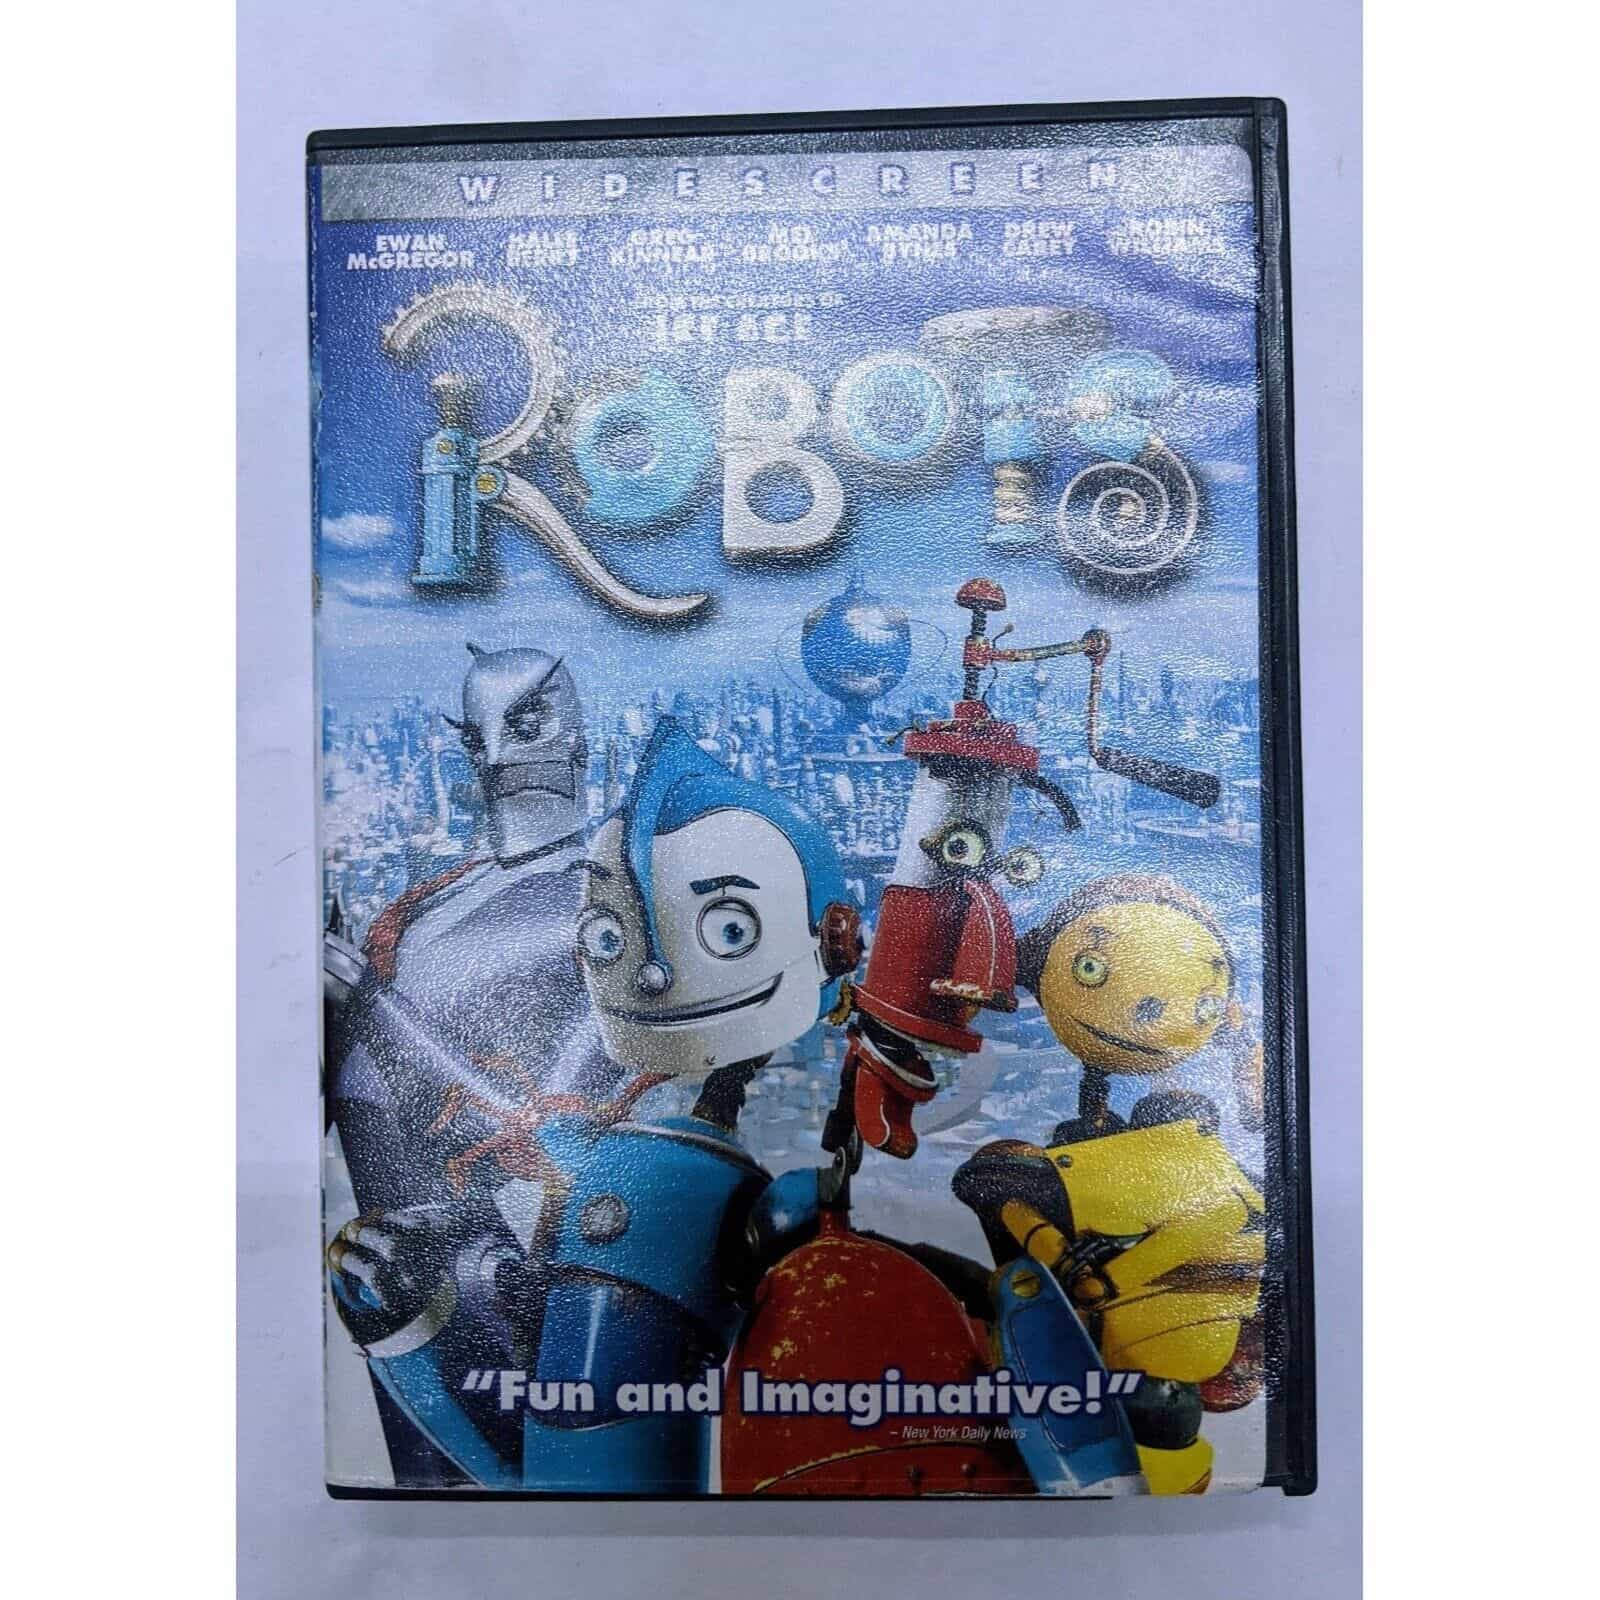 Robots DVD Movie – Widescreen Edition